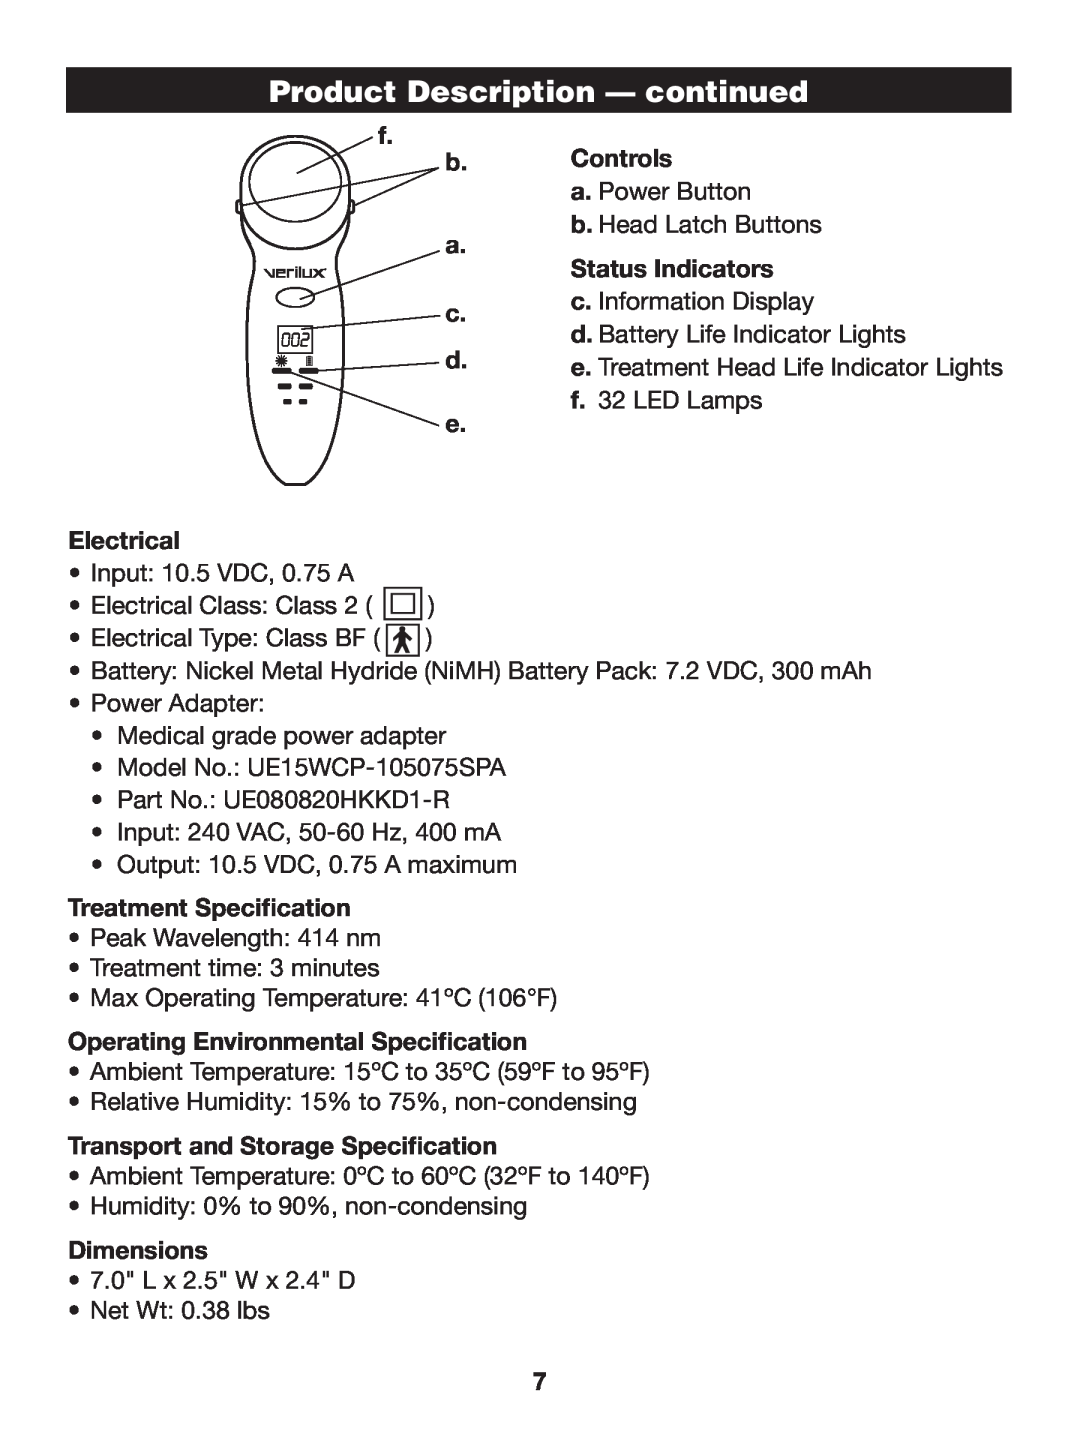 Verilux CW01 Product Description - continued, f b a, Controls, Status Indicators, Electrical, Treatment Specification 